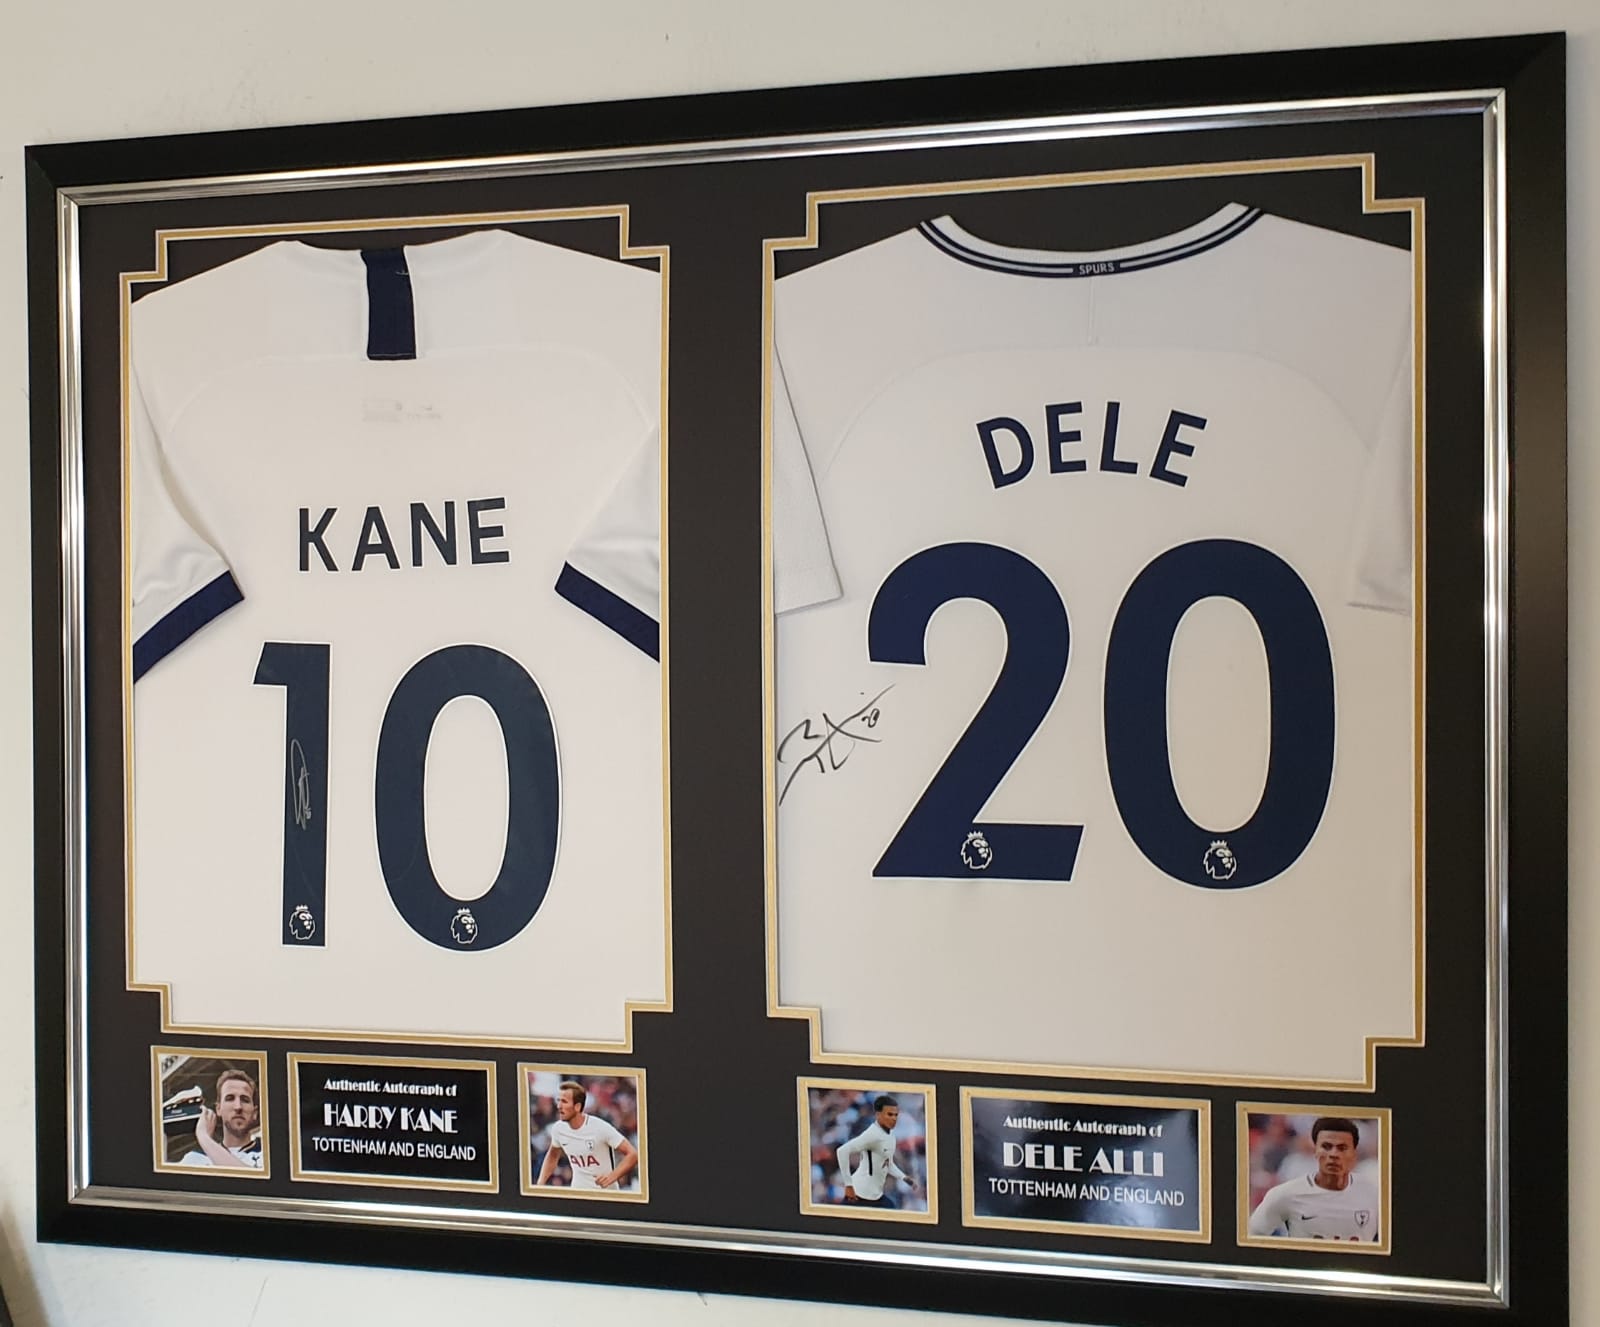 Harry Kane & Dele Alli Dual Signed 16x12 Tottenham Hotspur Photograph 26177